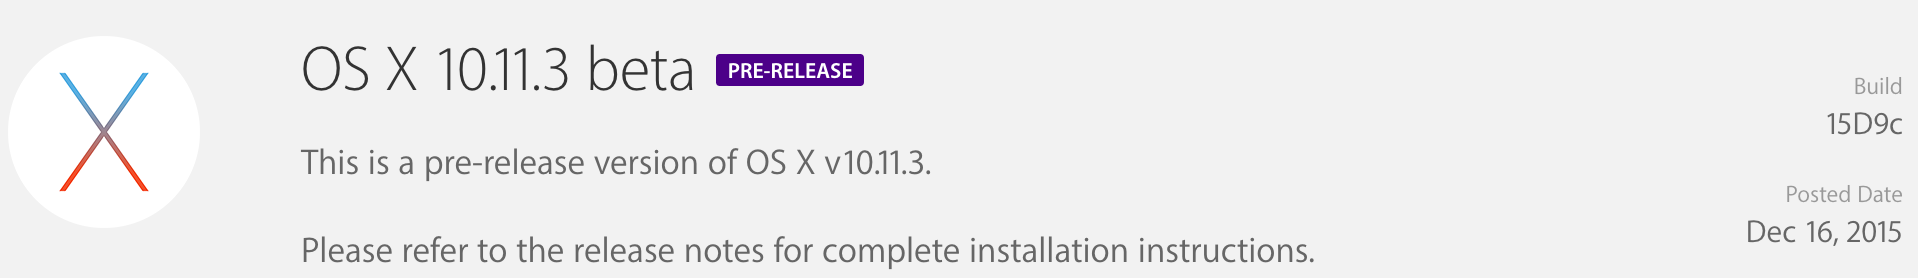 OS X 10.11.3 Developer Beta 1 Update (15D9c)